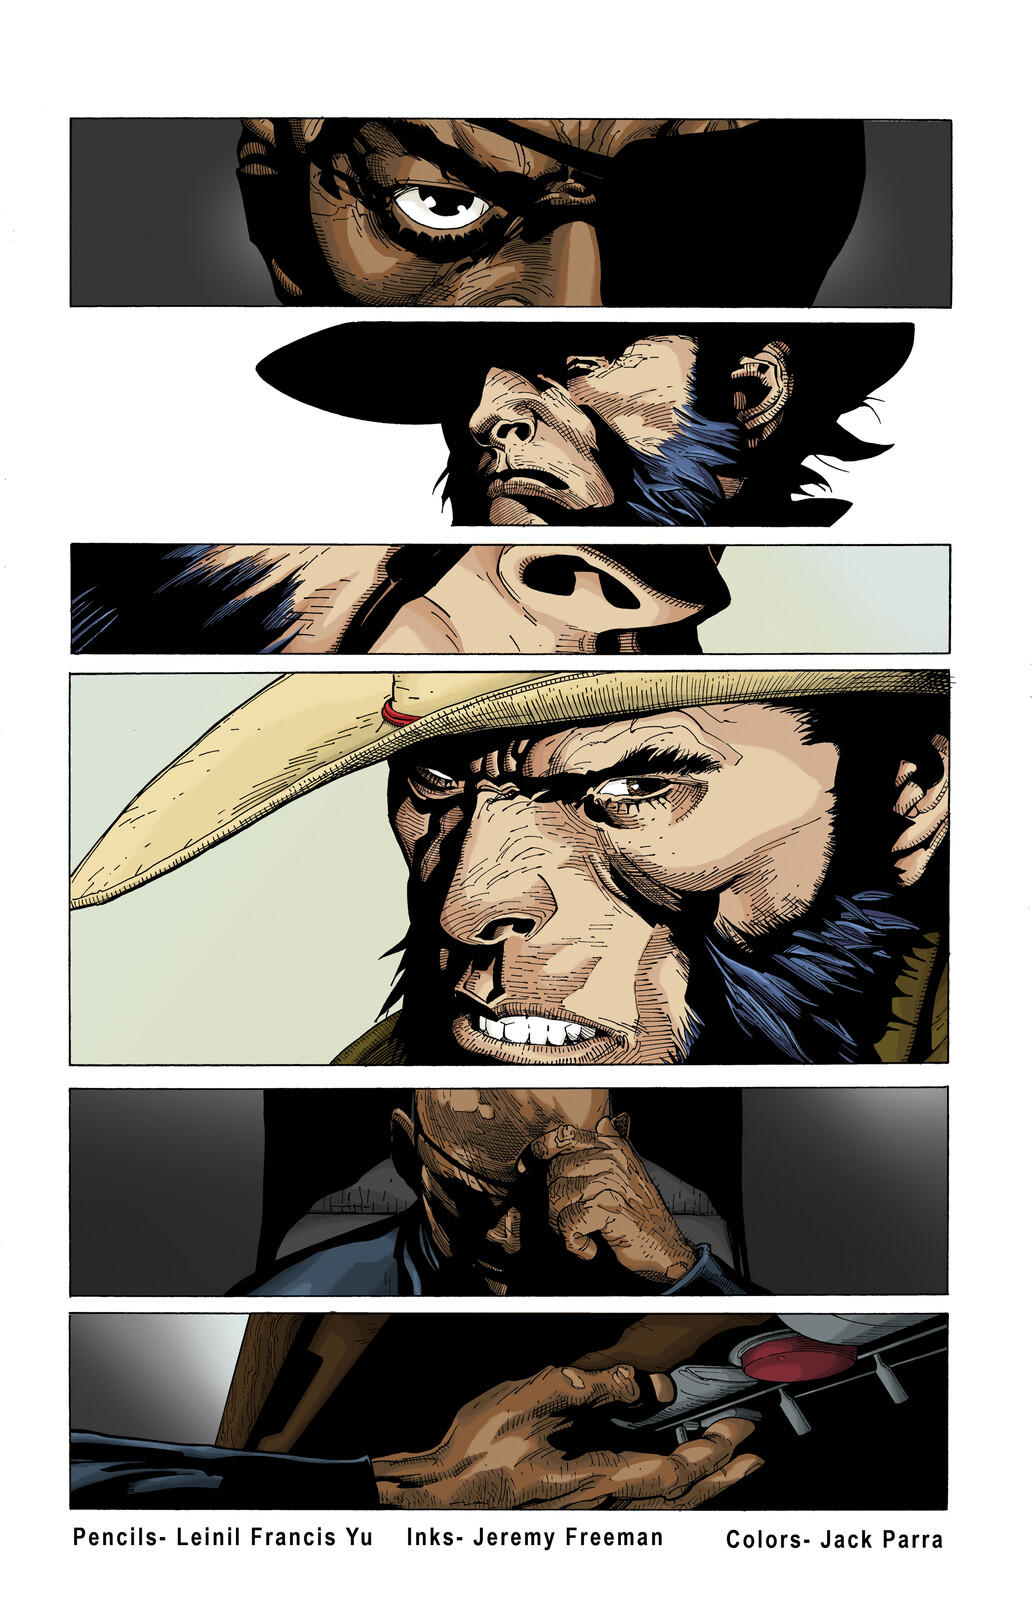 Ultimate Hulk vs Wolverine
Collaborative Piece.
Pencils: Lenil Frances Yu 
Inks: Jeremy Freeman
Colors by me